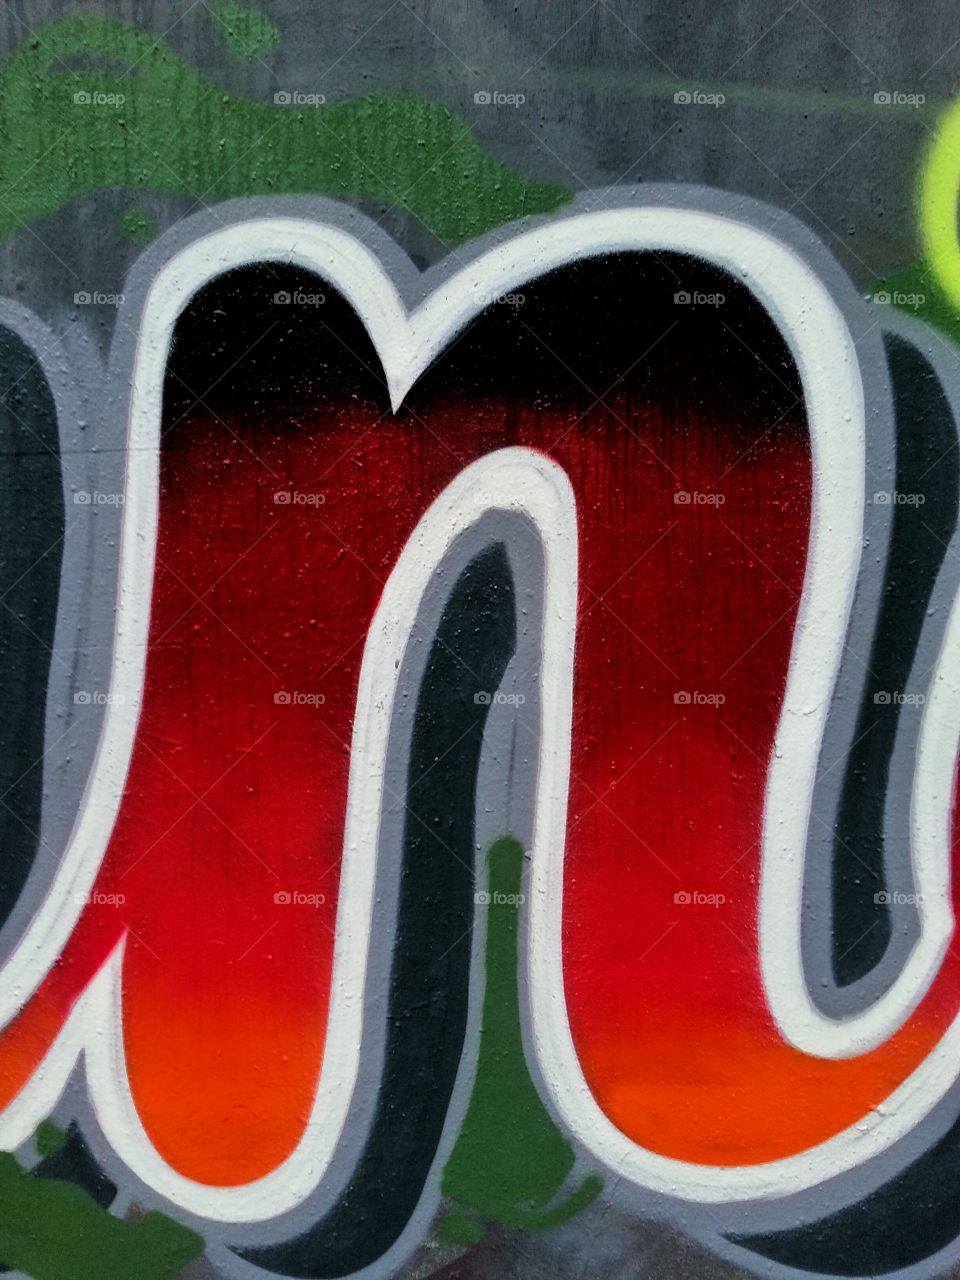 Graffiti letter